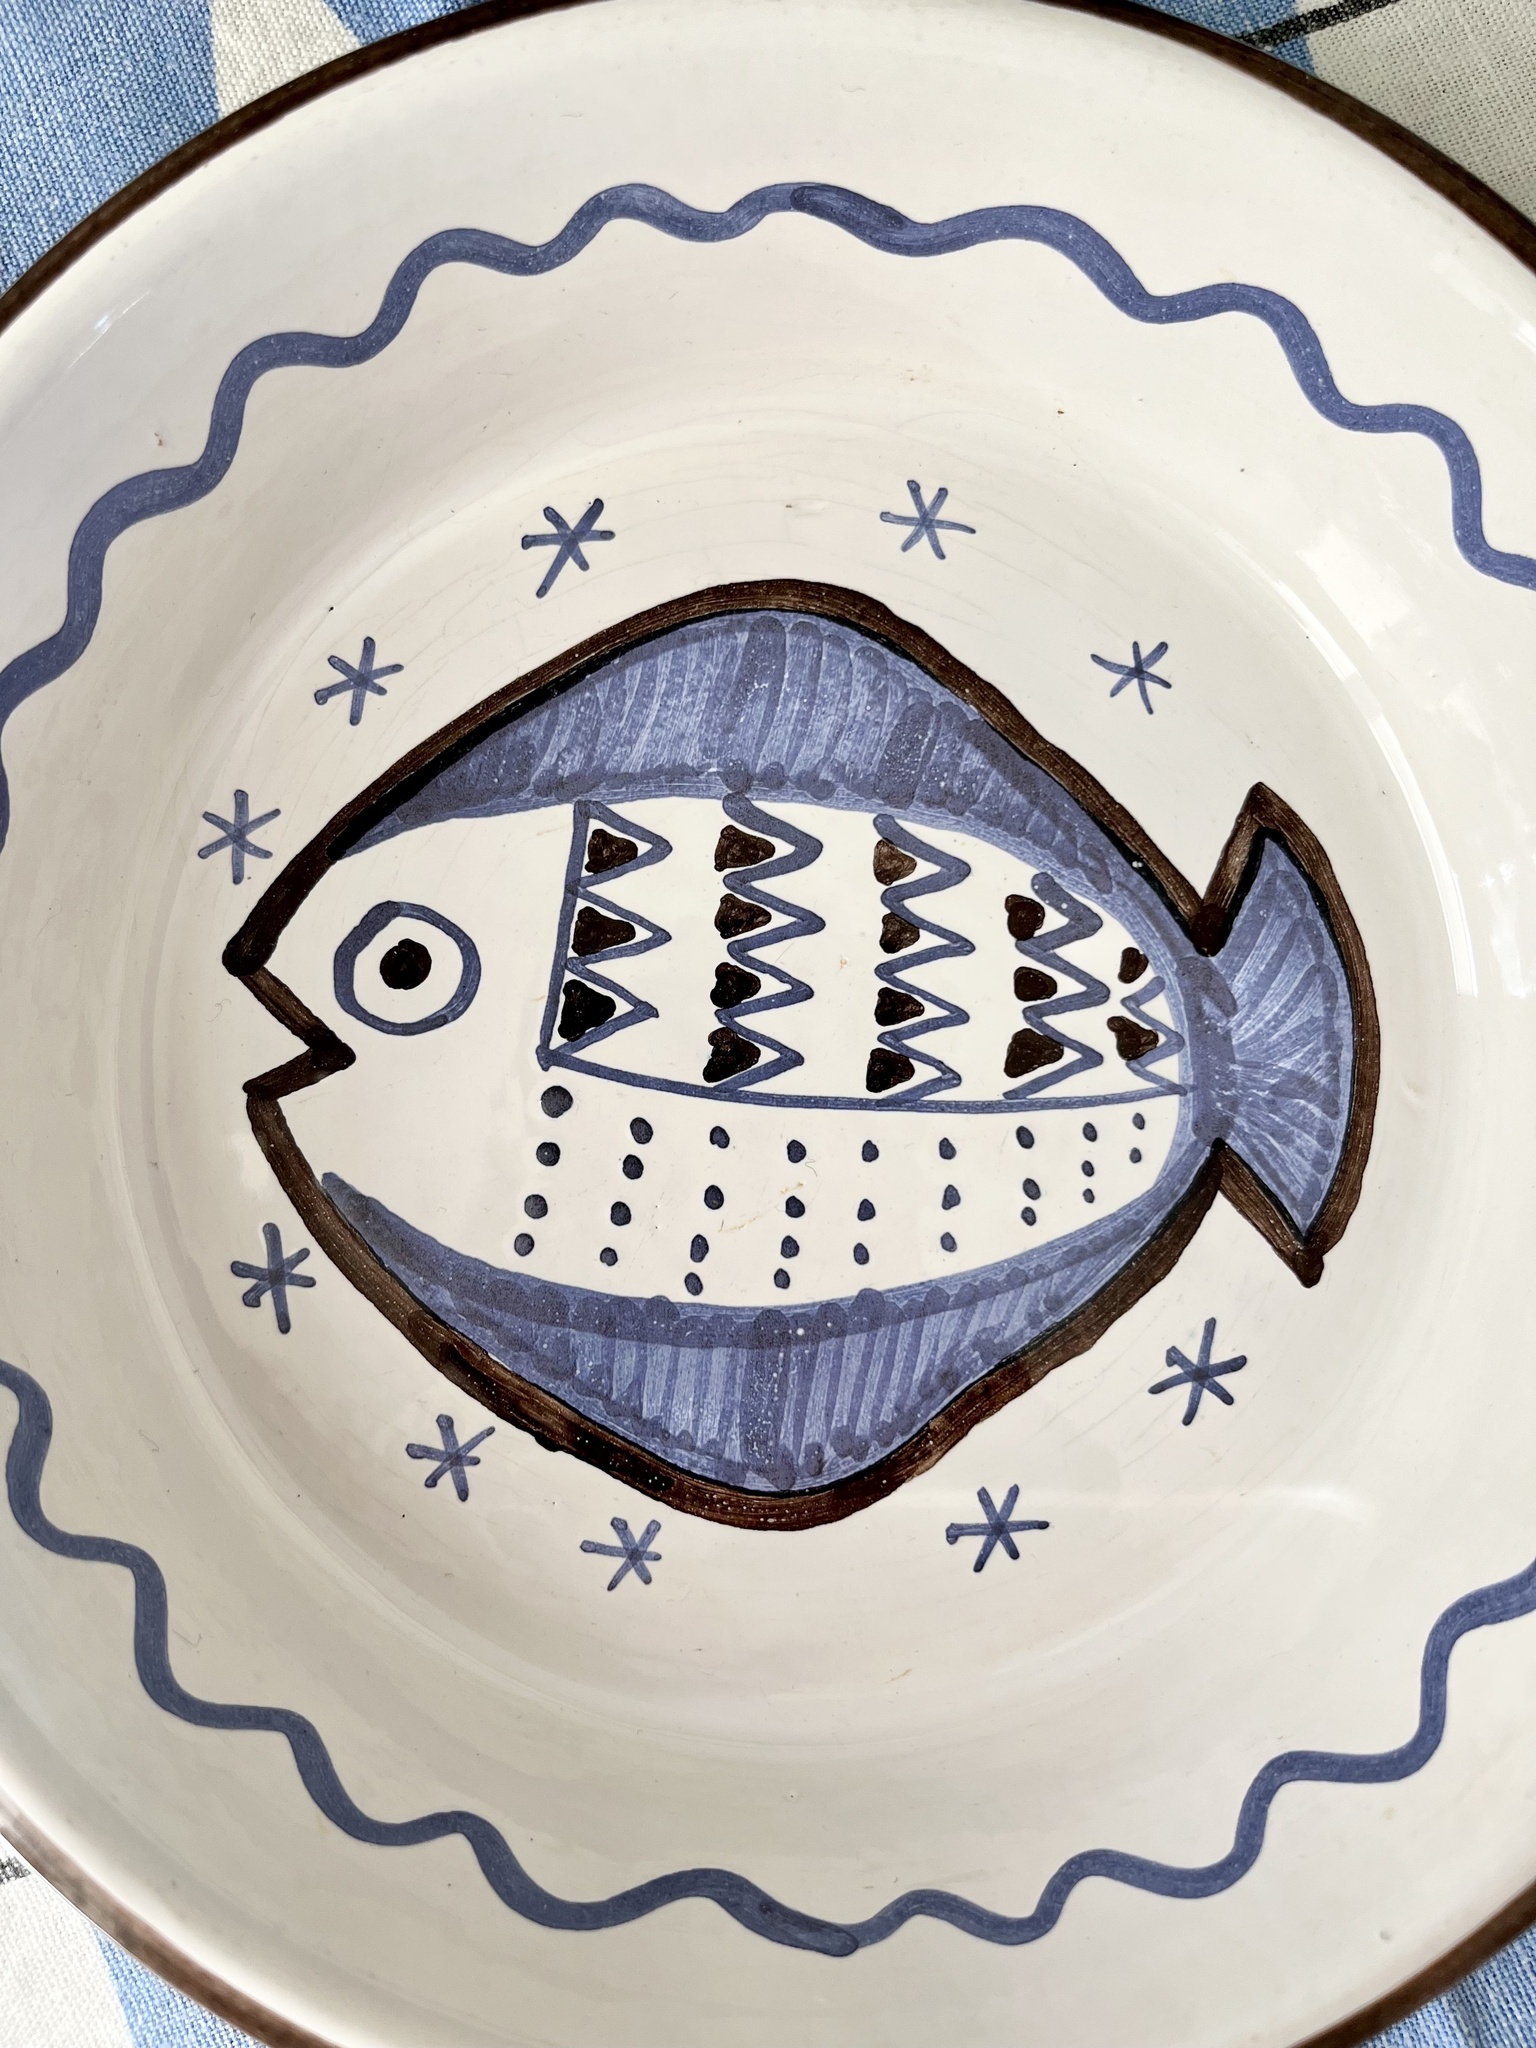 SÅLD Ugnsfast form med fiskmotiv, Jie keramik?